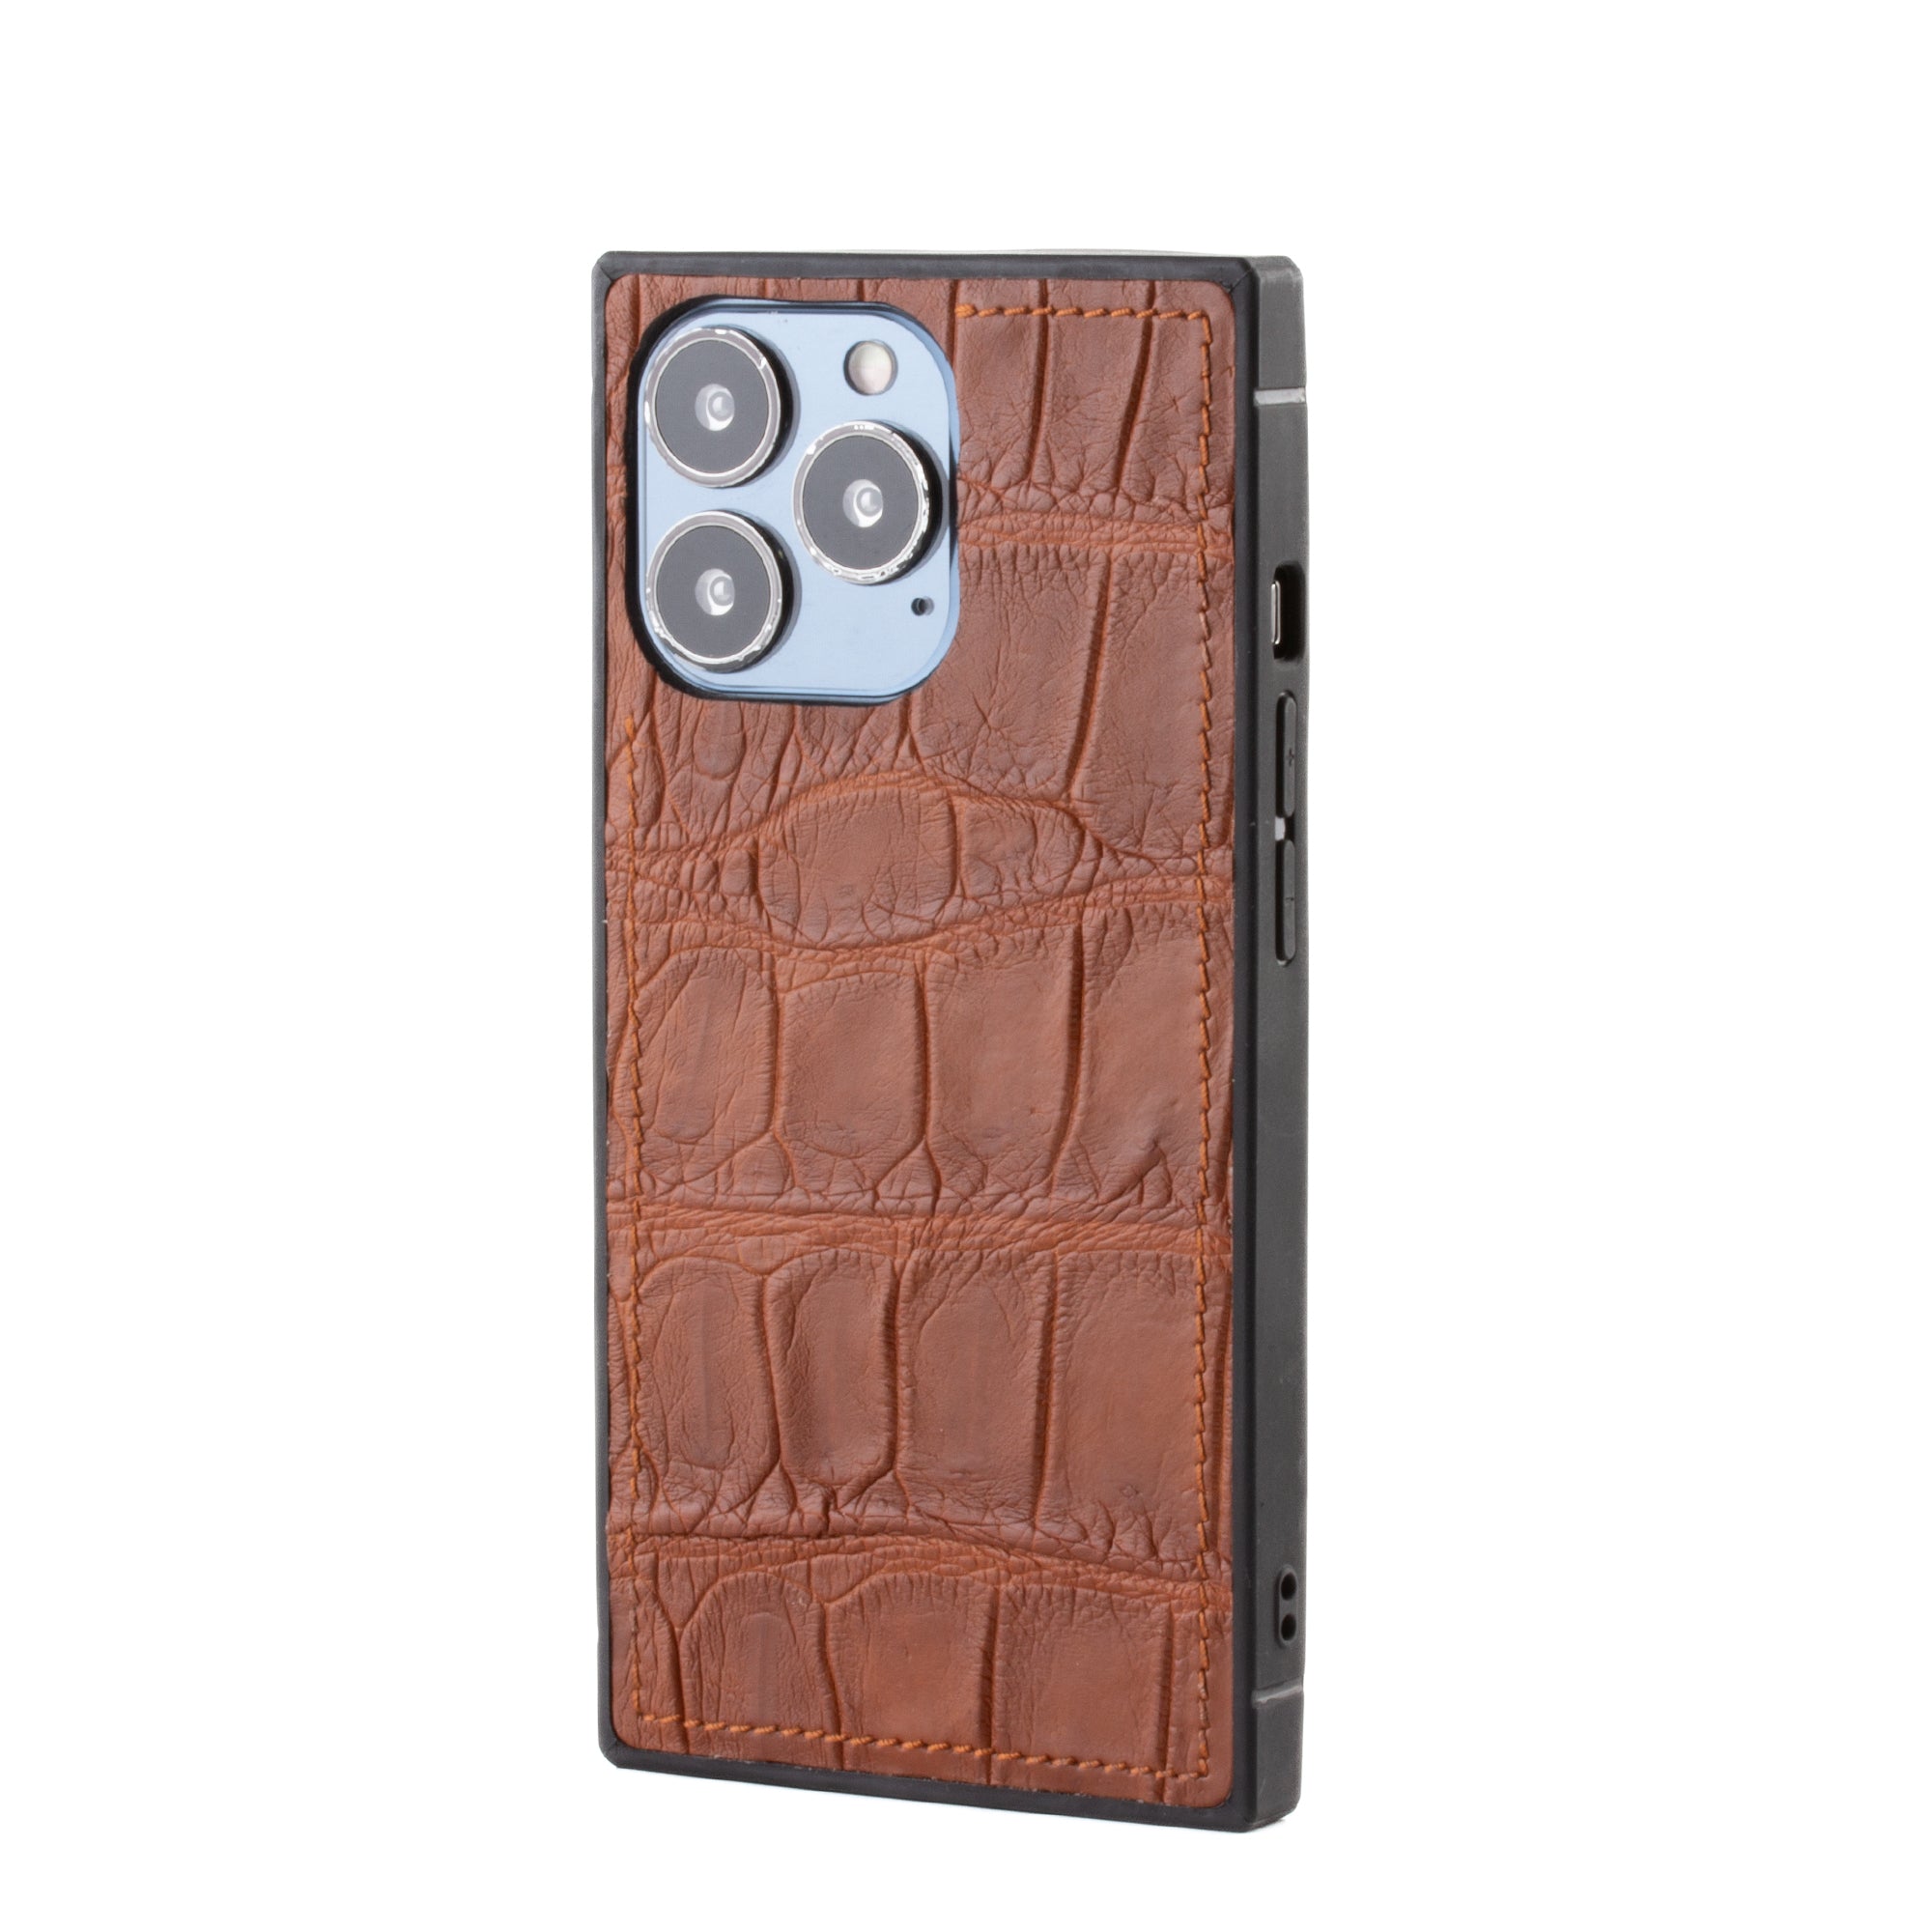 Vente exclusive - Coque "Square case" cuir pour iPhone 13 Pro - Alligator marron 1